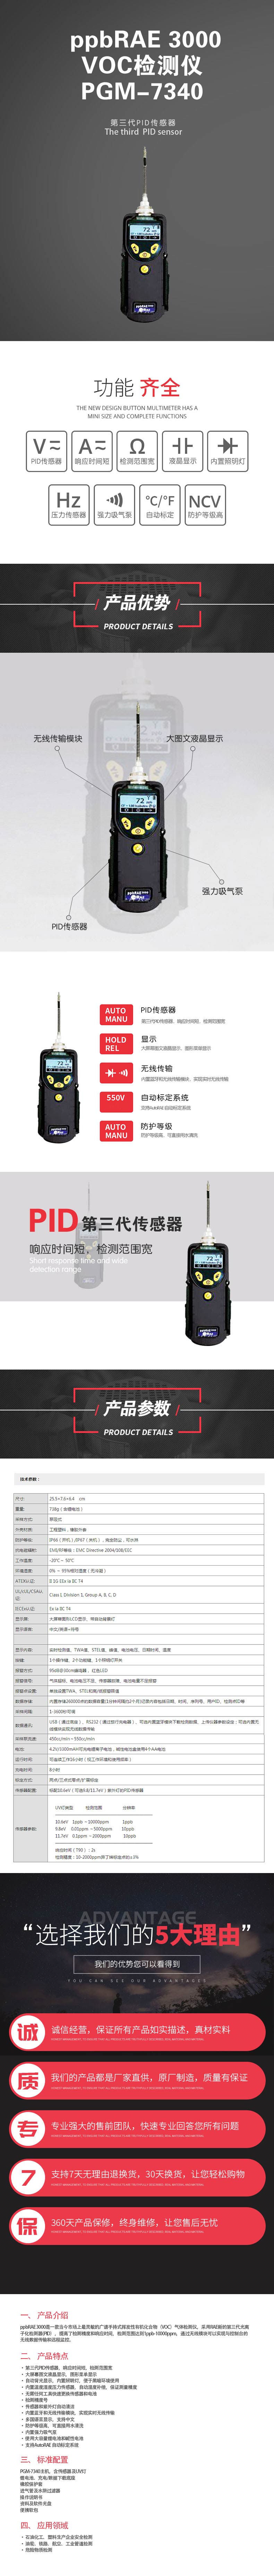 ppbRAE-3000-VOC检测仪-PGM-7340.jpg